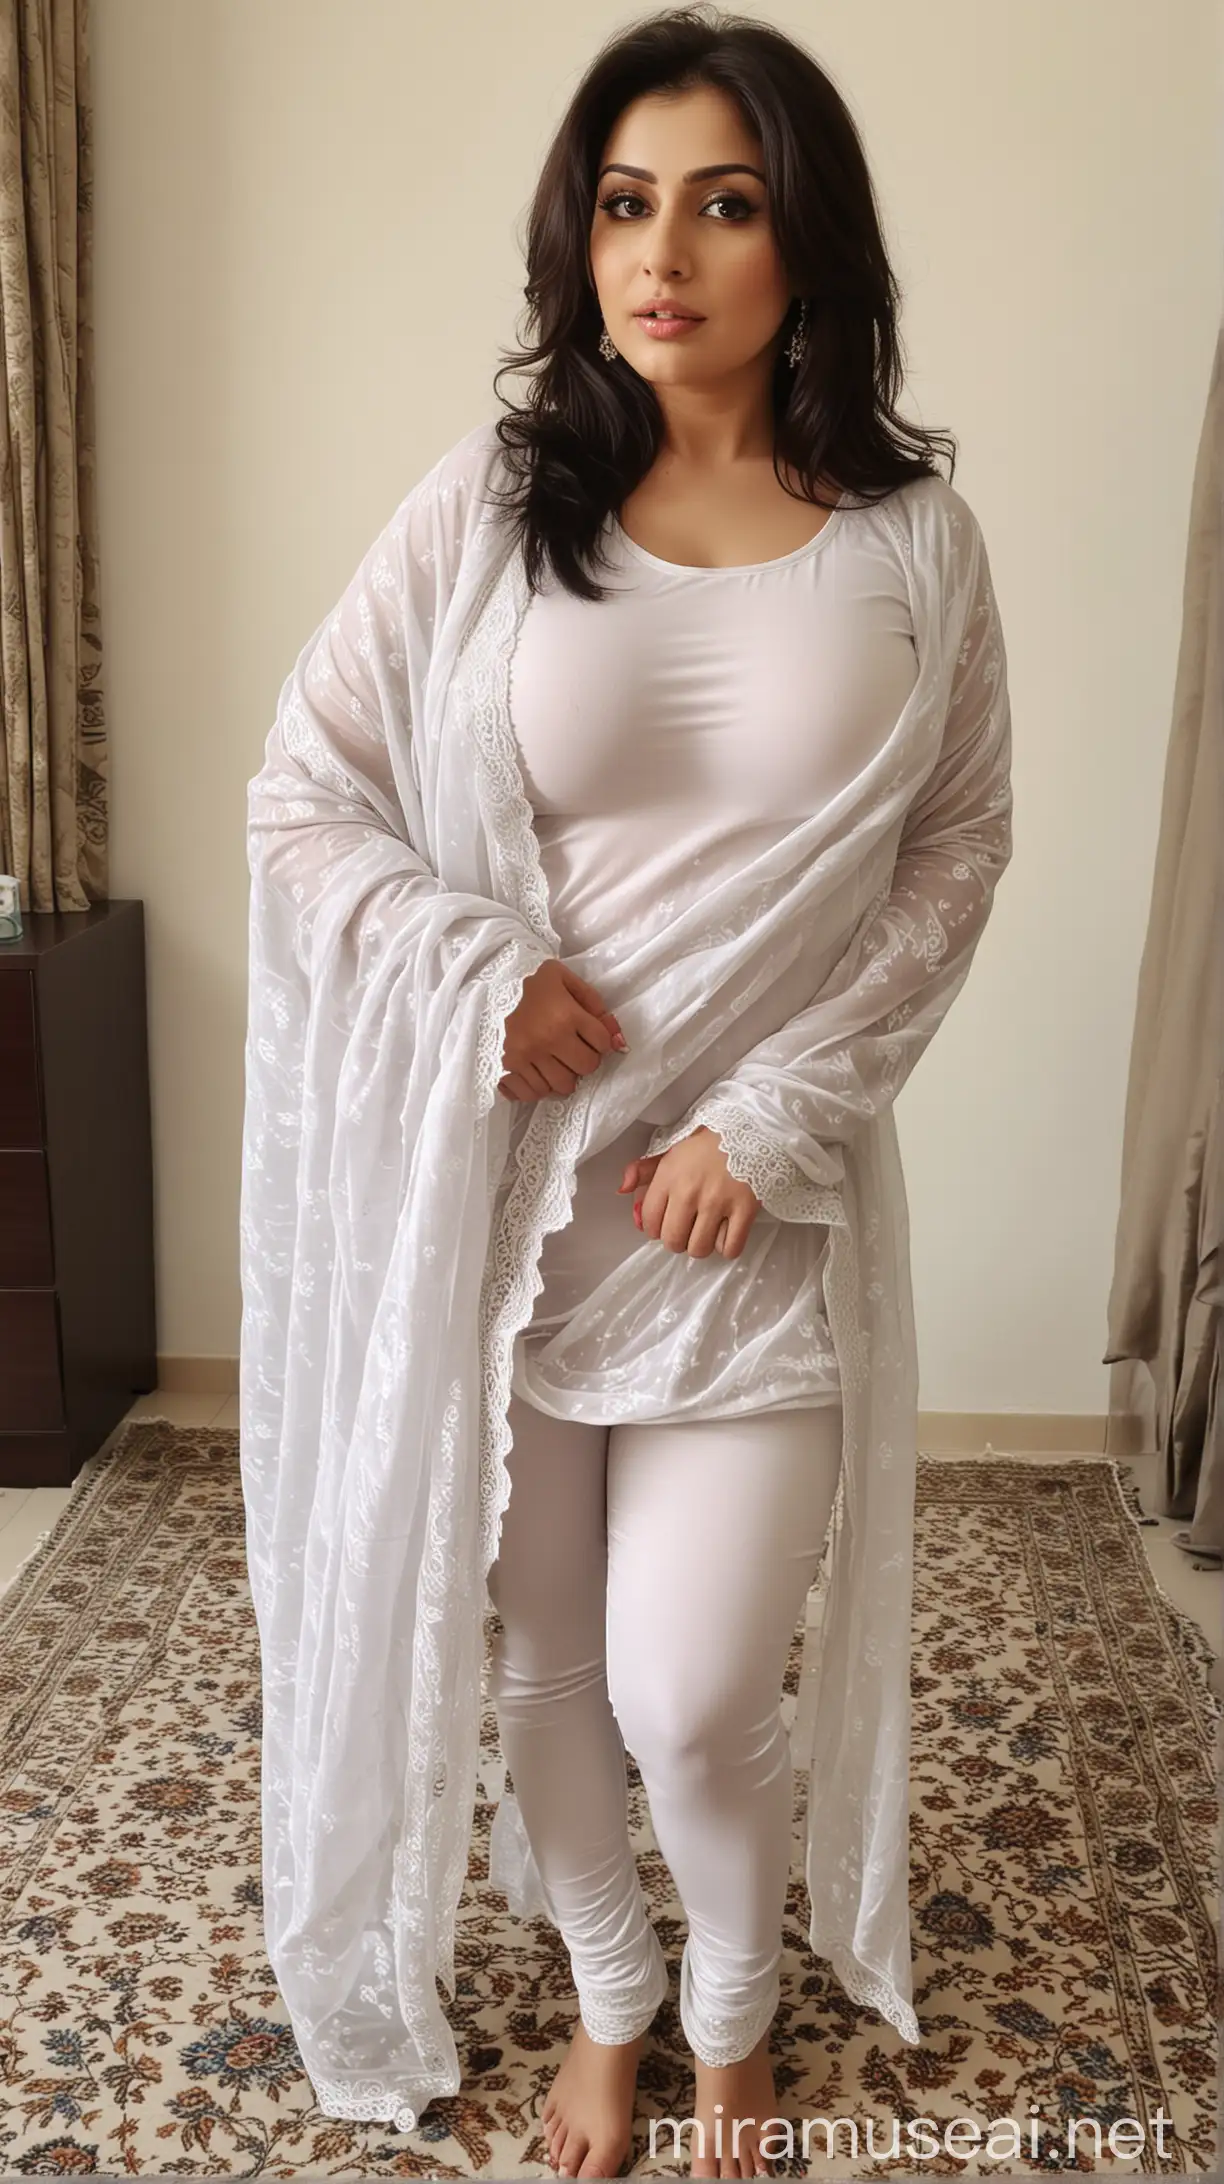 Pakistani mistress  ,extreme big boobs  ,big ass, extreme hot and sexy, Narrator pose, cotton dupatta 